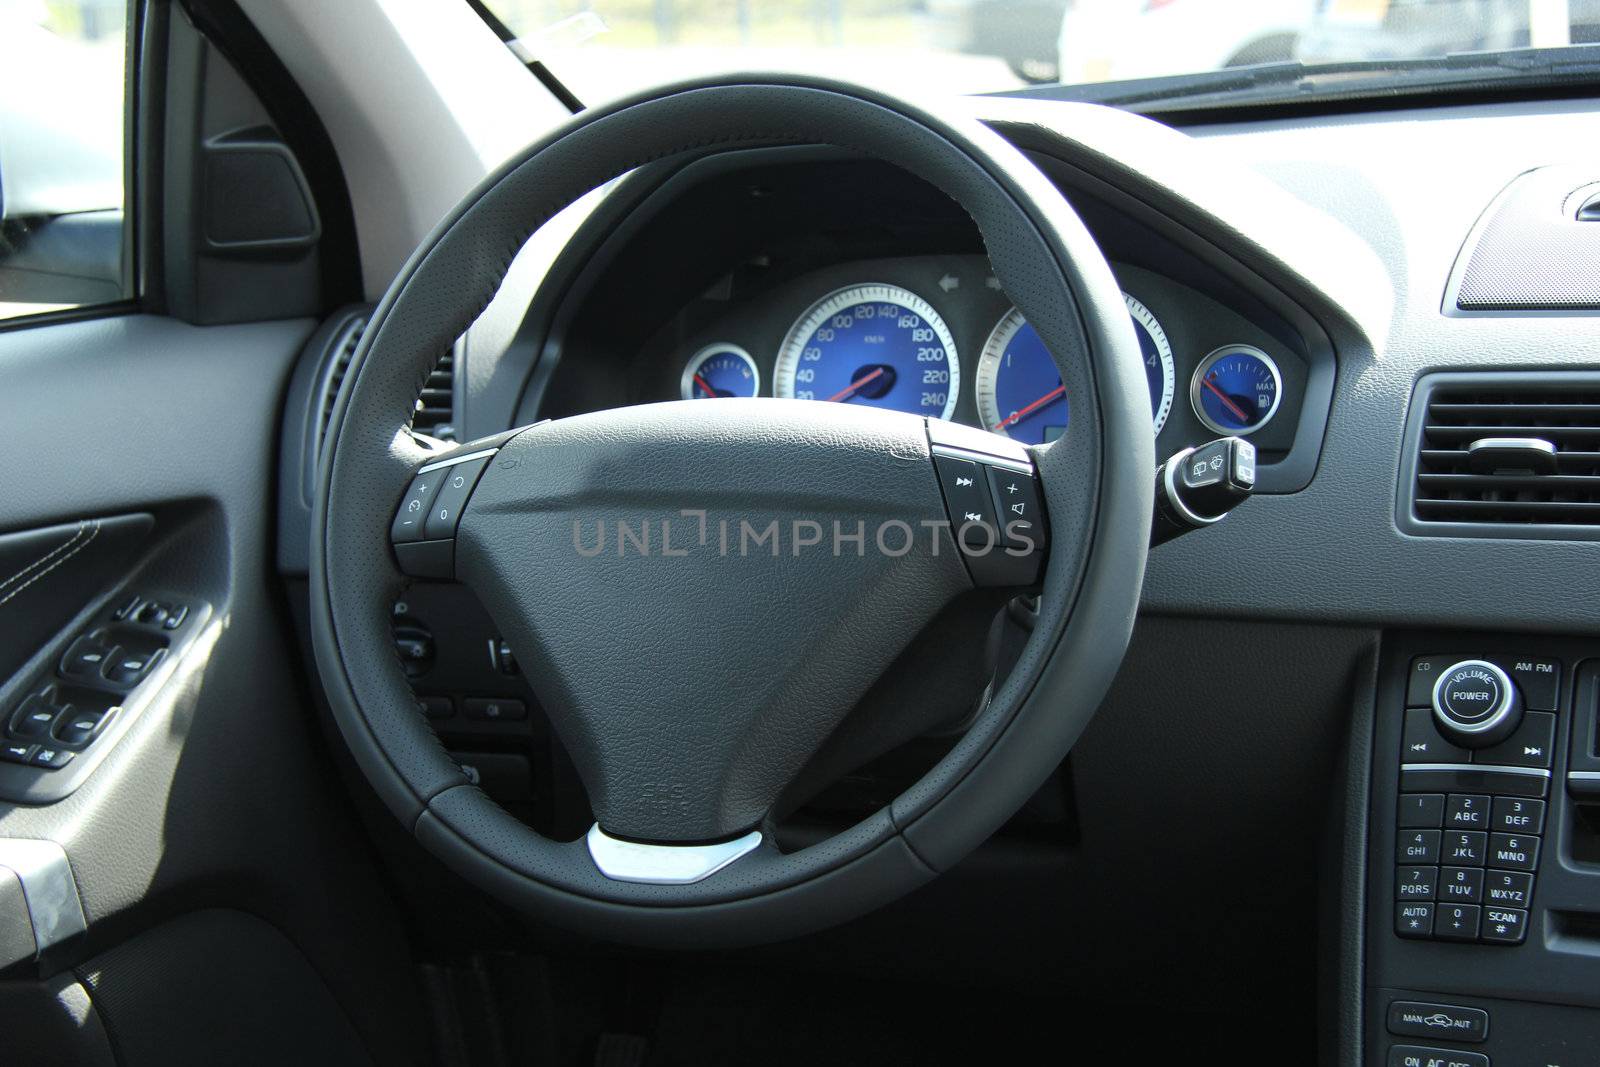 High tech dashboard of a modern car